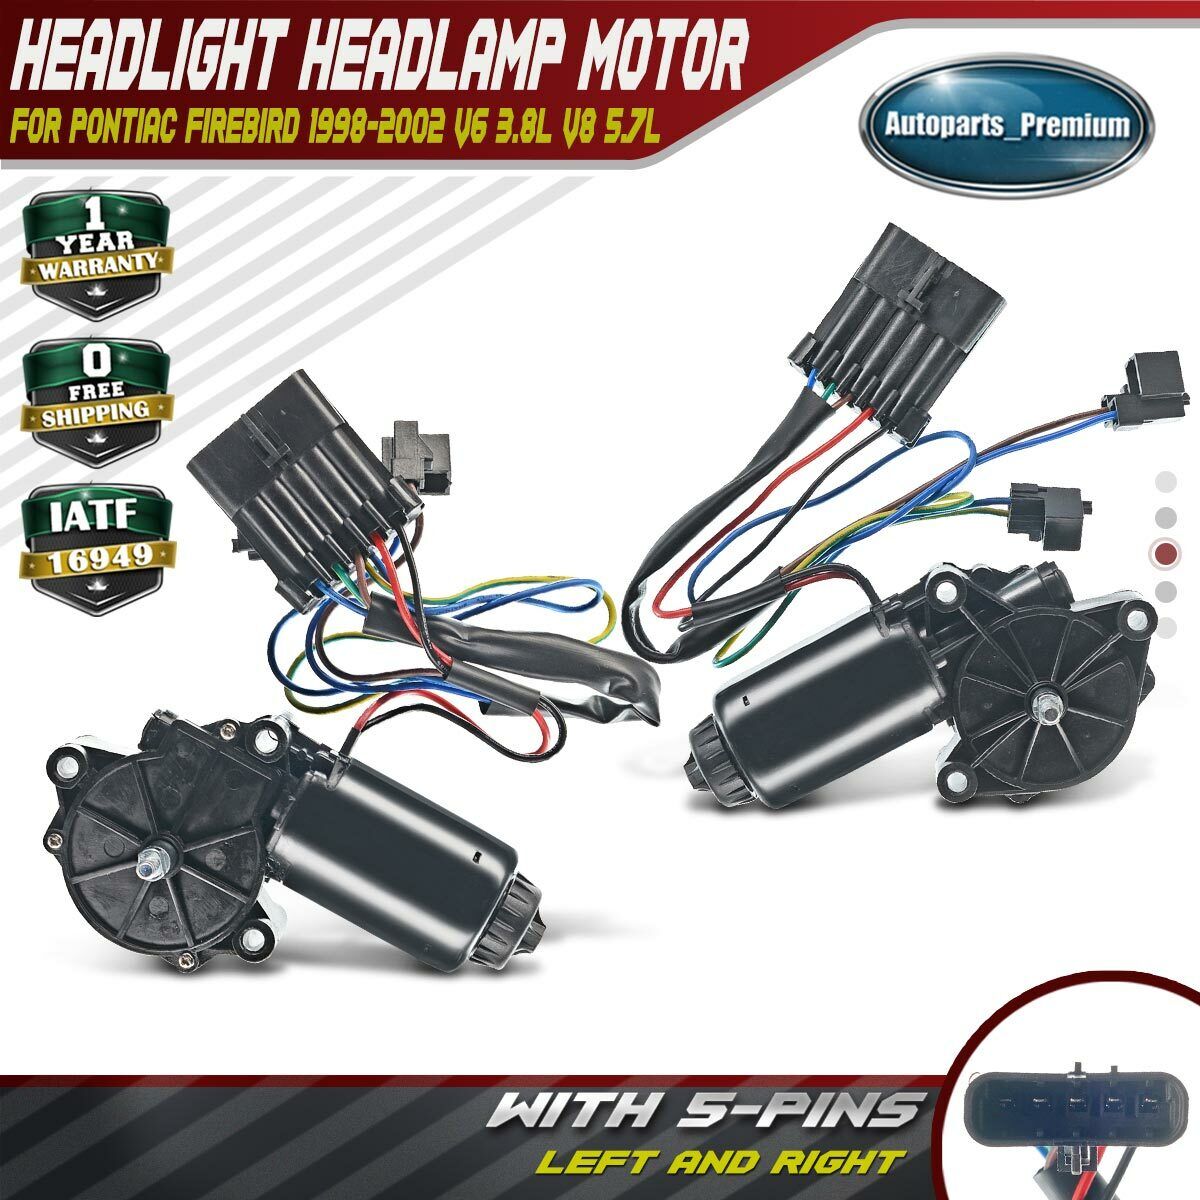 2x Left and Right Headlight Headlamp Motor for Pontiac Firebird 1998-2002 LH RH